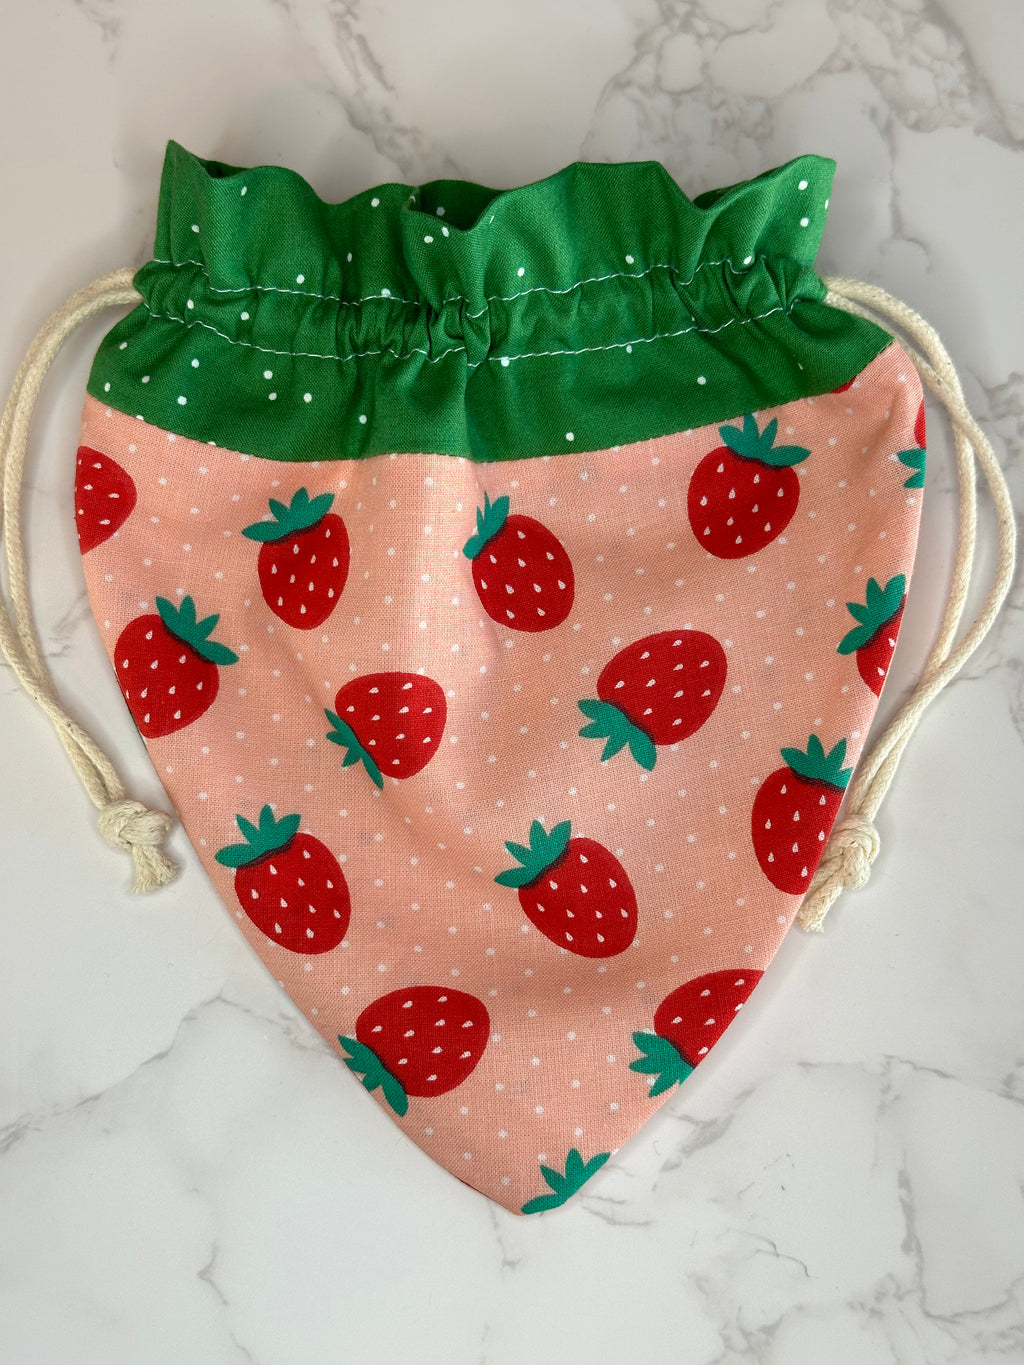 strawberry bag - strawberries (meta!)